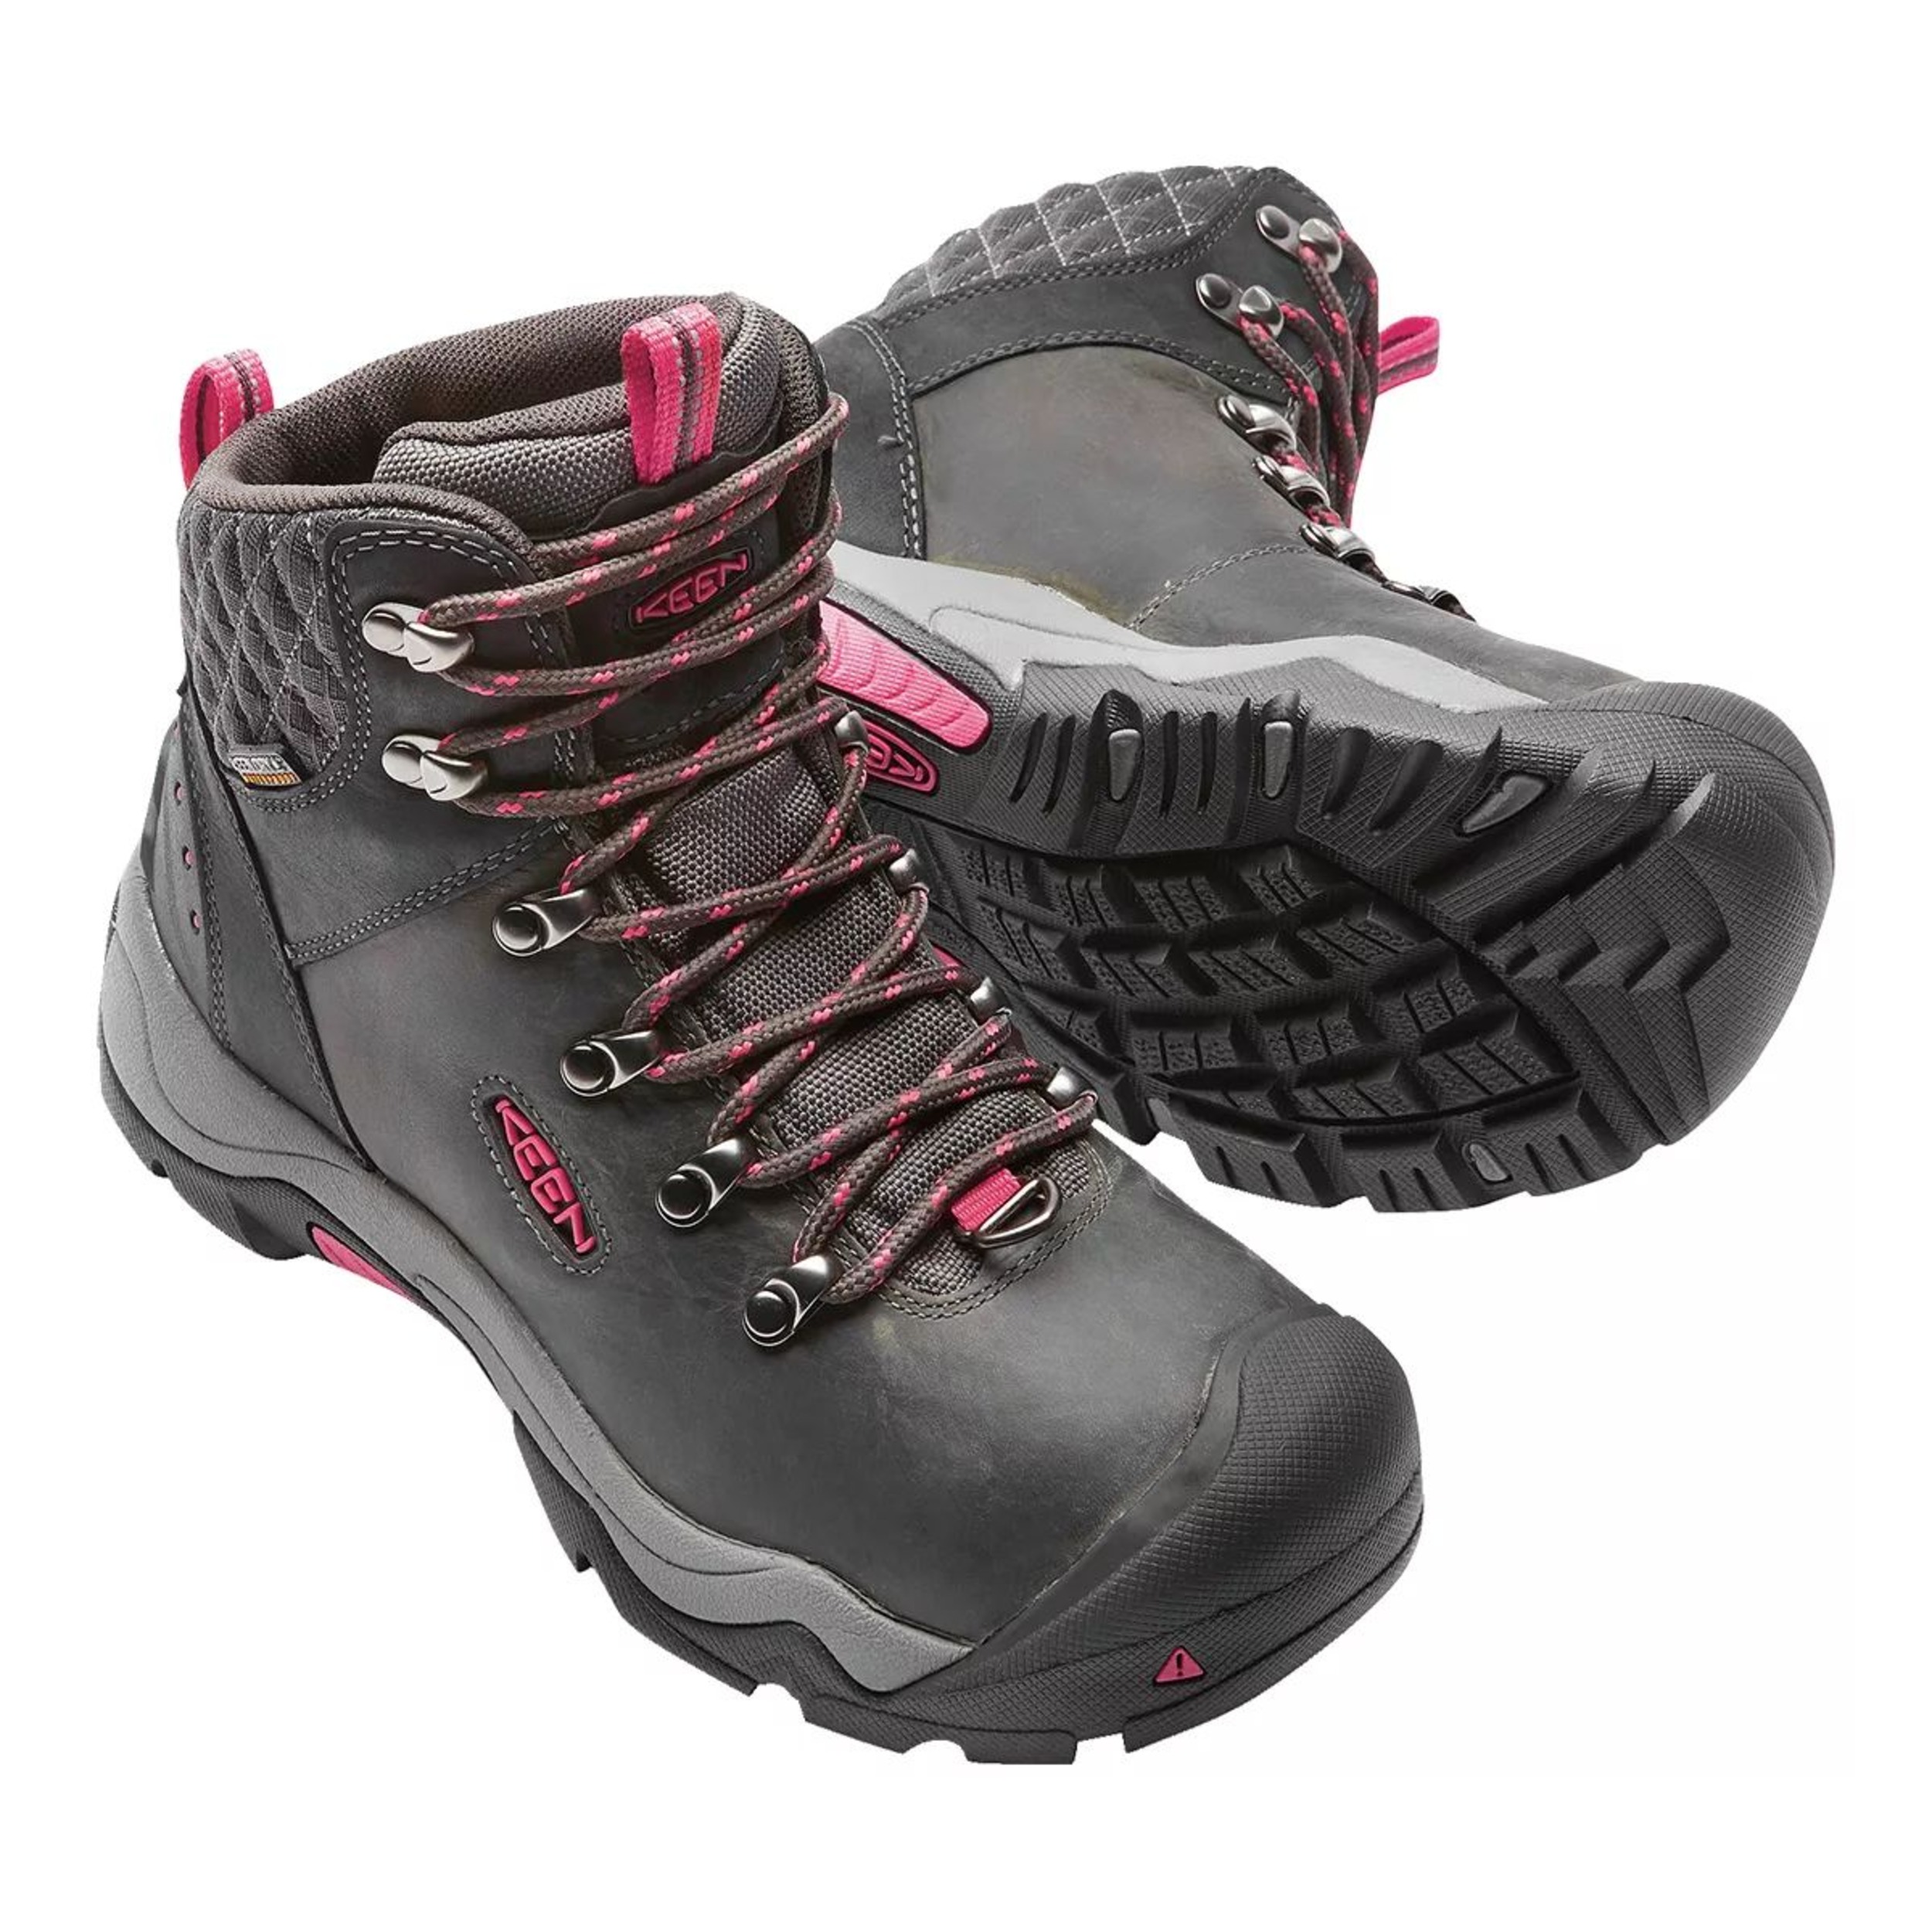 Keen Womens Revel Iii Waterproof Insulated Non Slip Hiking Boots Sportchek 